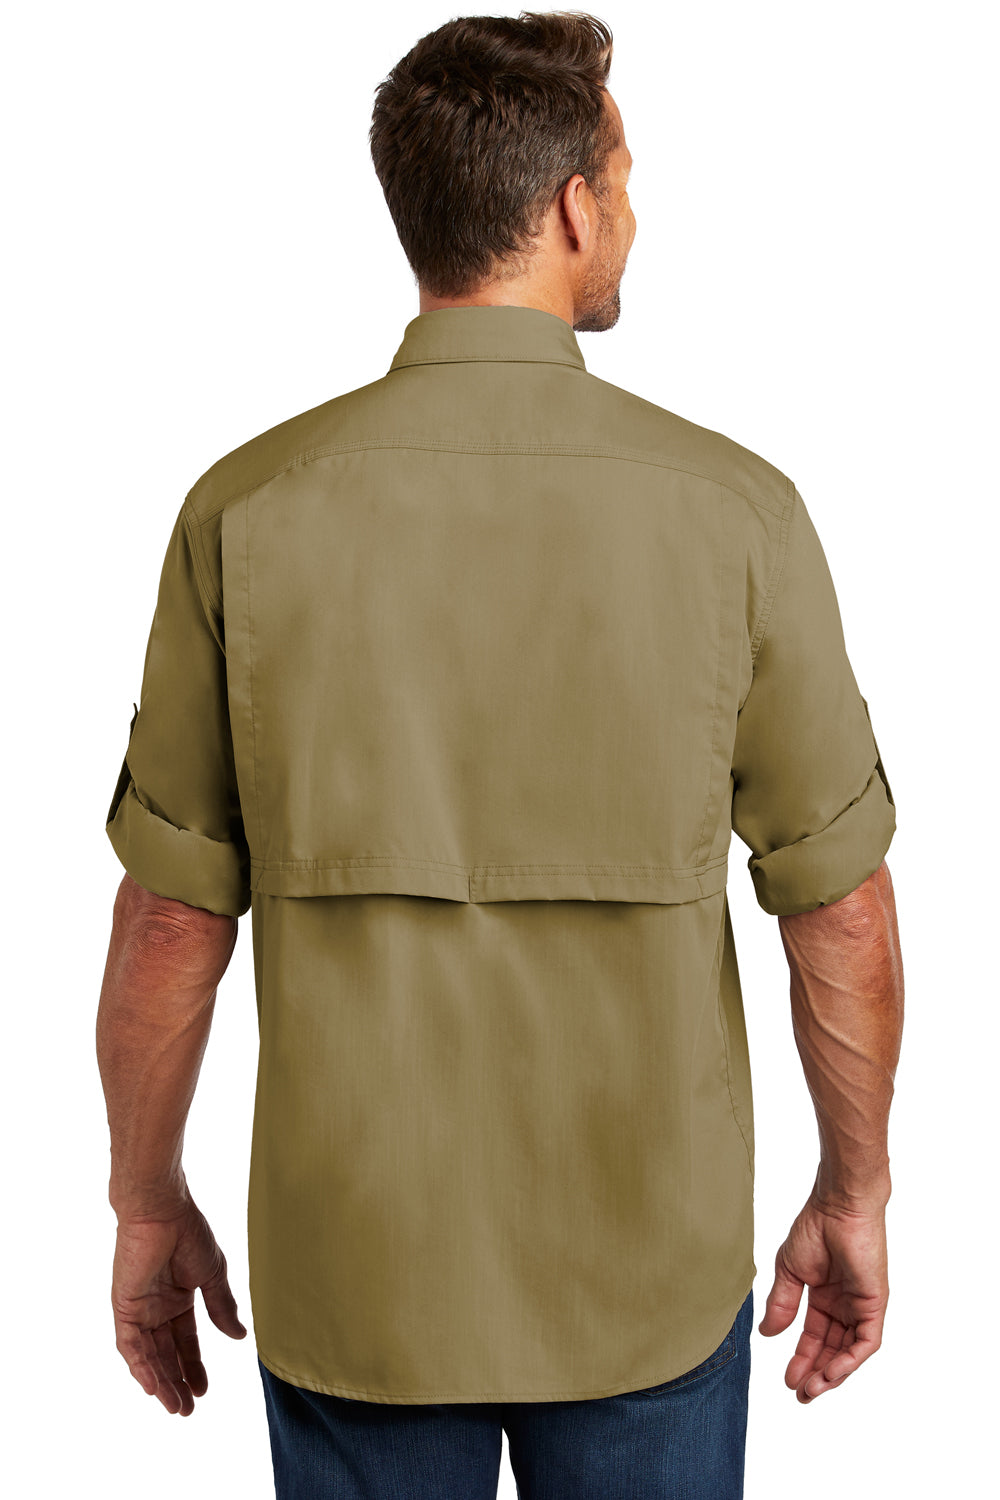 Carhartt CT102418 Mens Force Ridgefield Moisture Wicking Long Sleeve Button Down Shirt w/ Double Pockets Khaki Brown Back